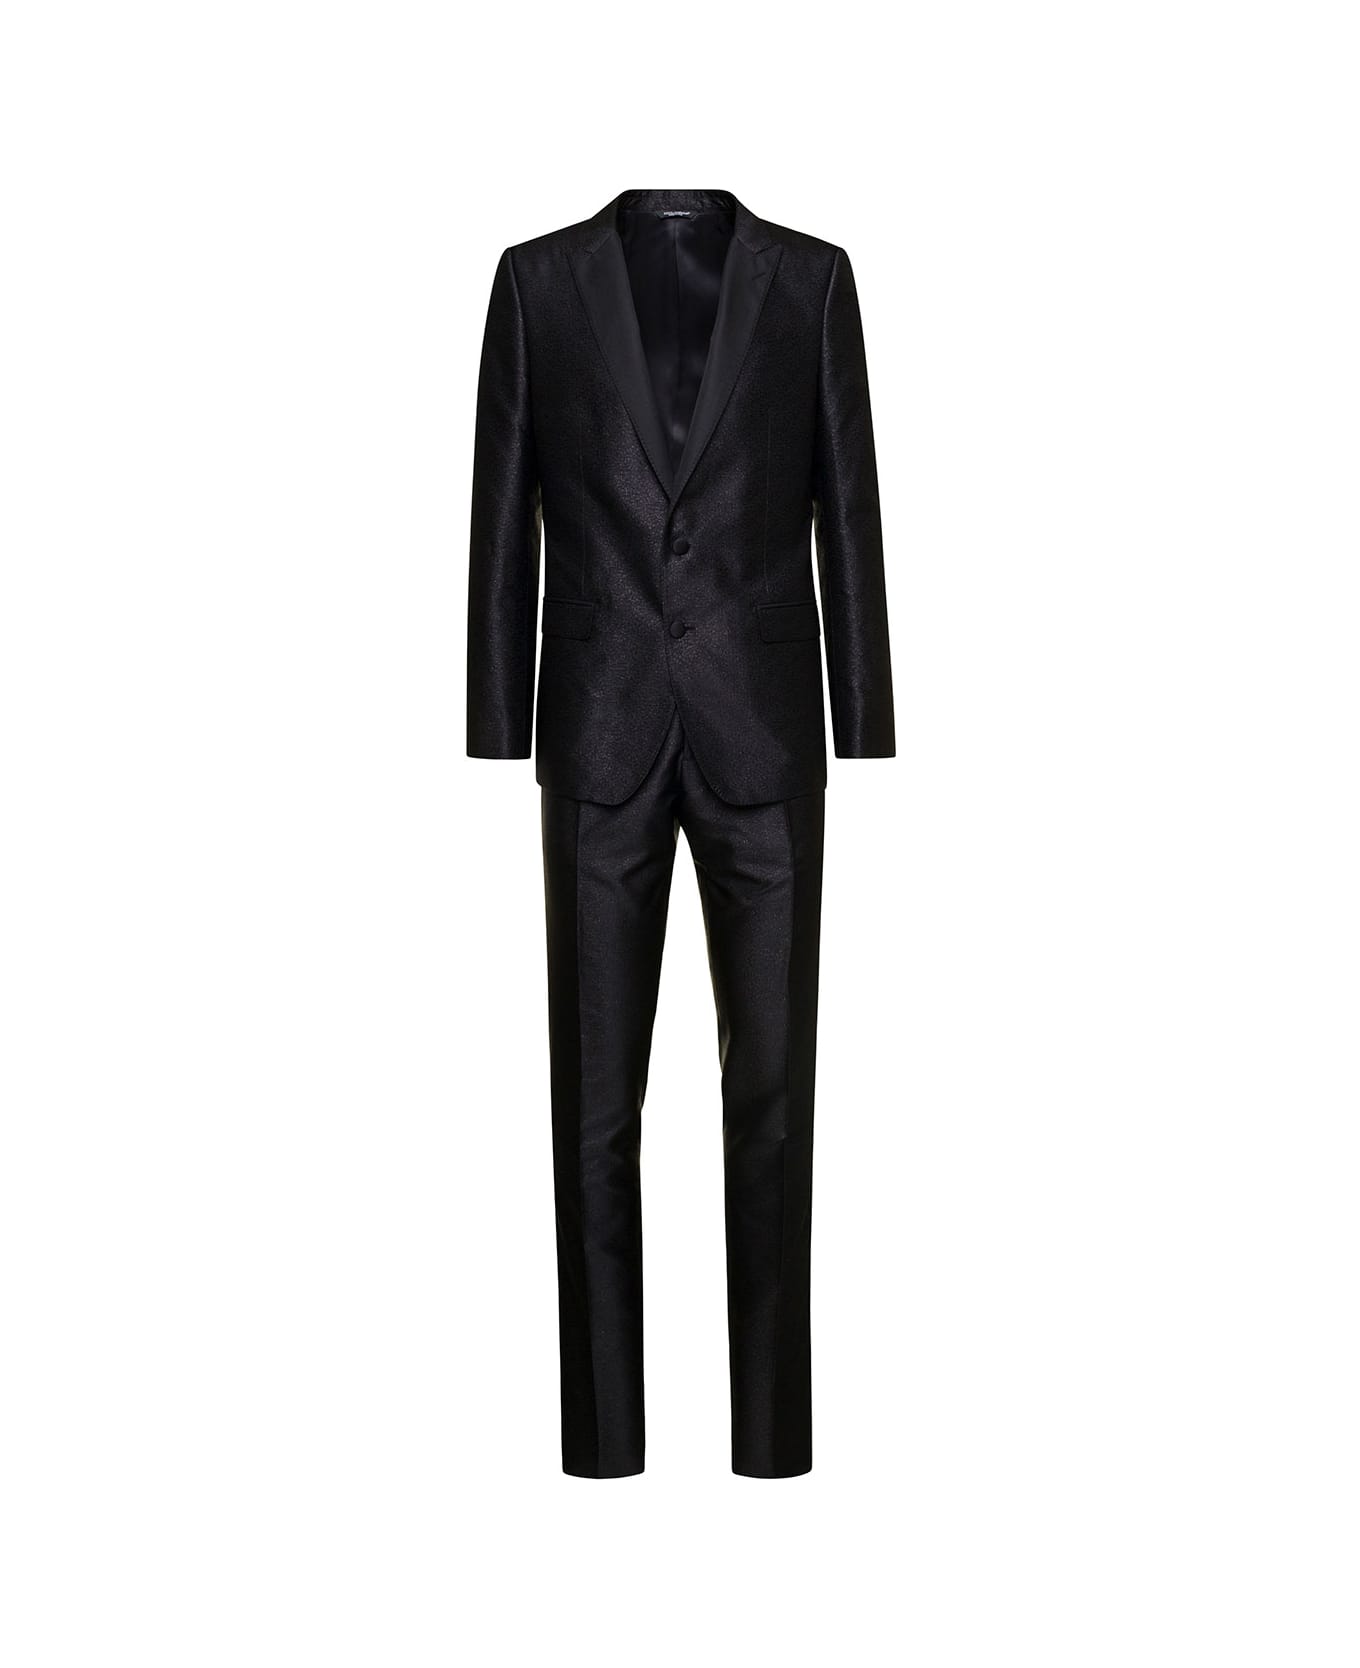 Dolce ethereal & Gabbana 'martini' Black Single-brested Tuxedo Suit In Silk Lamé Jacquard Man - Black